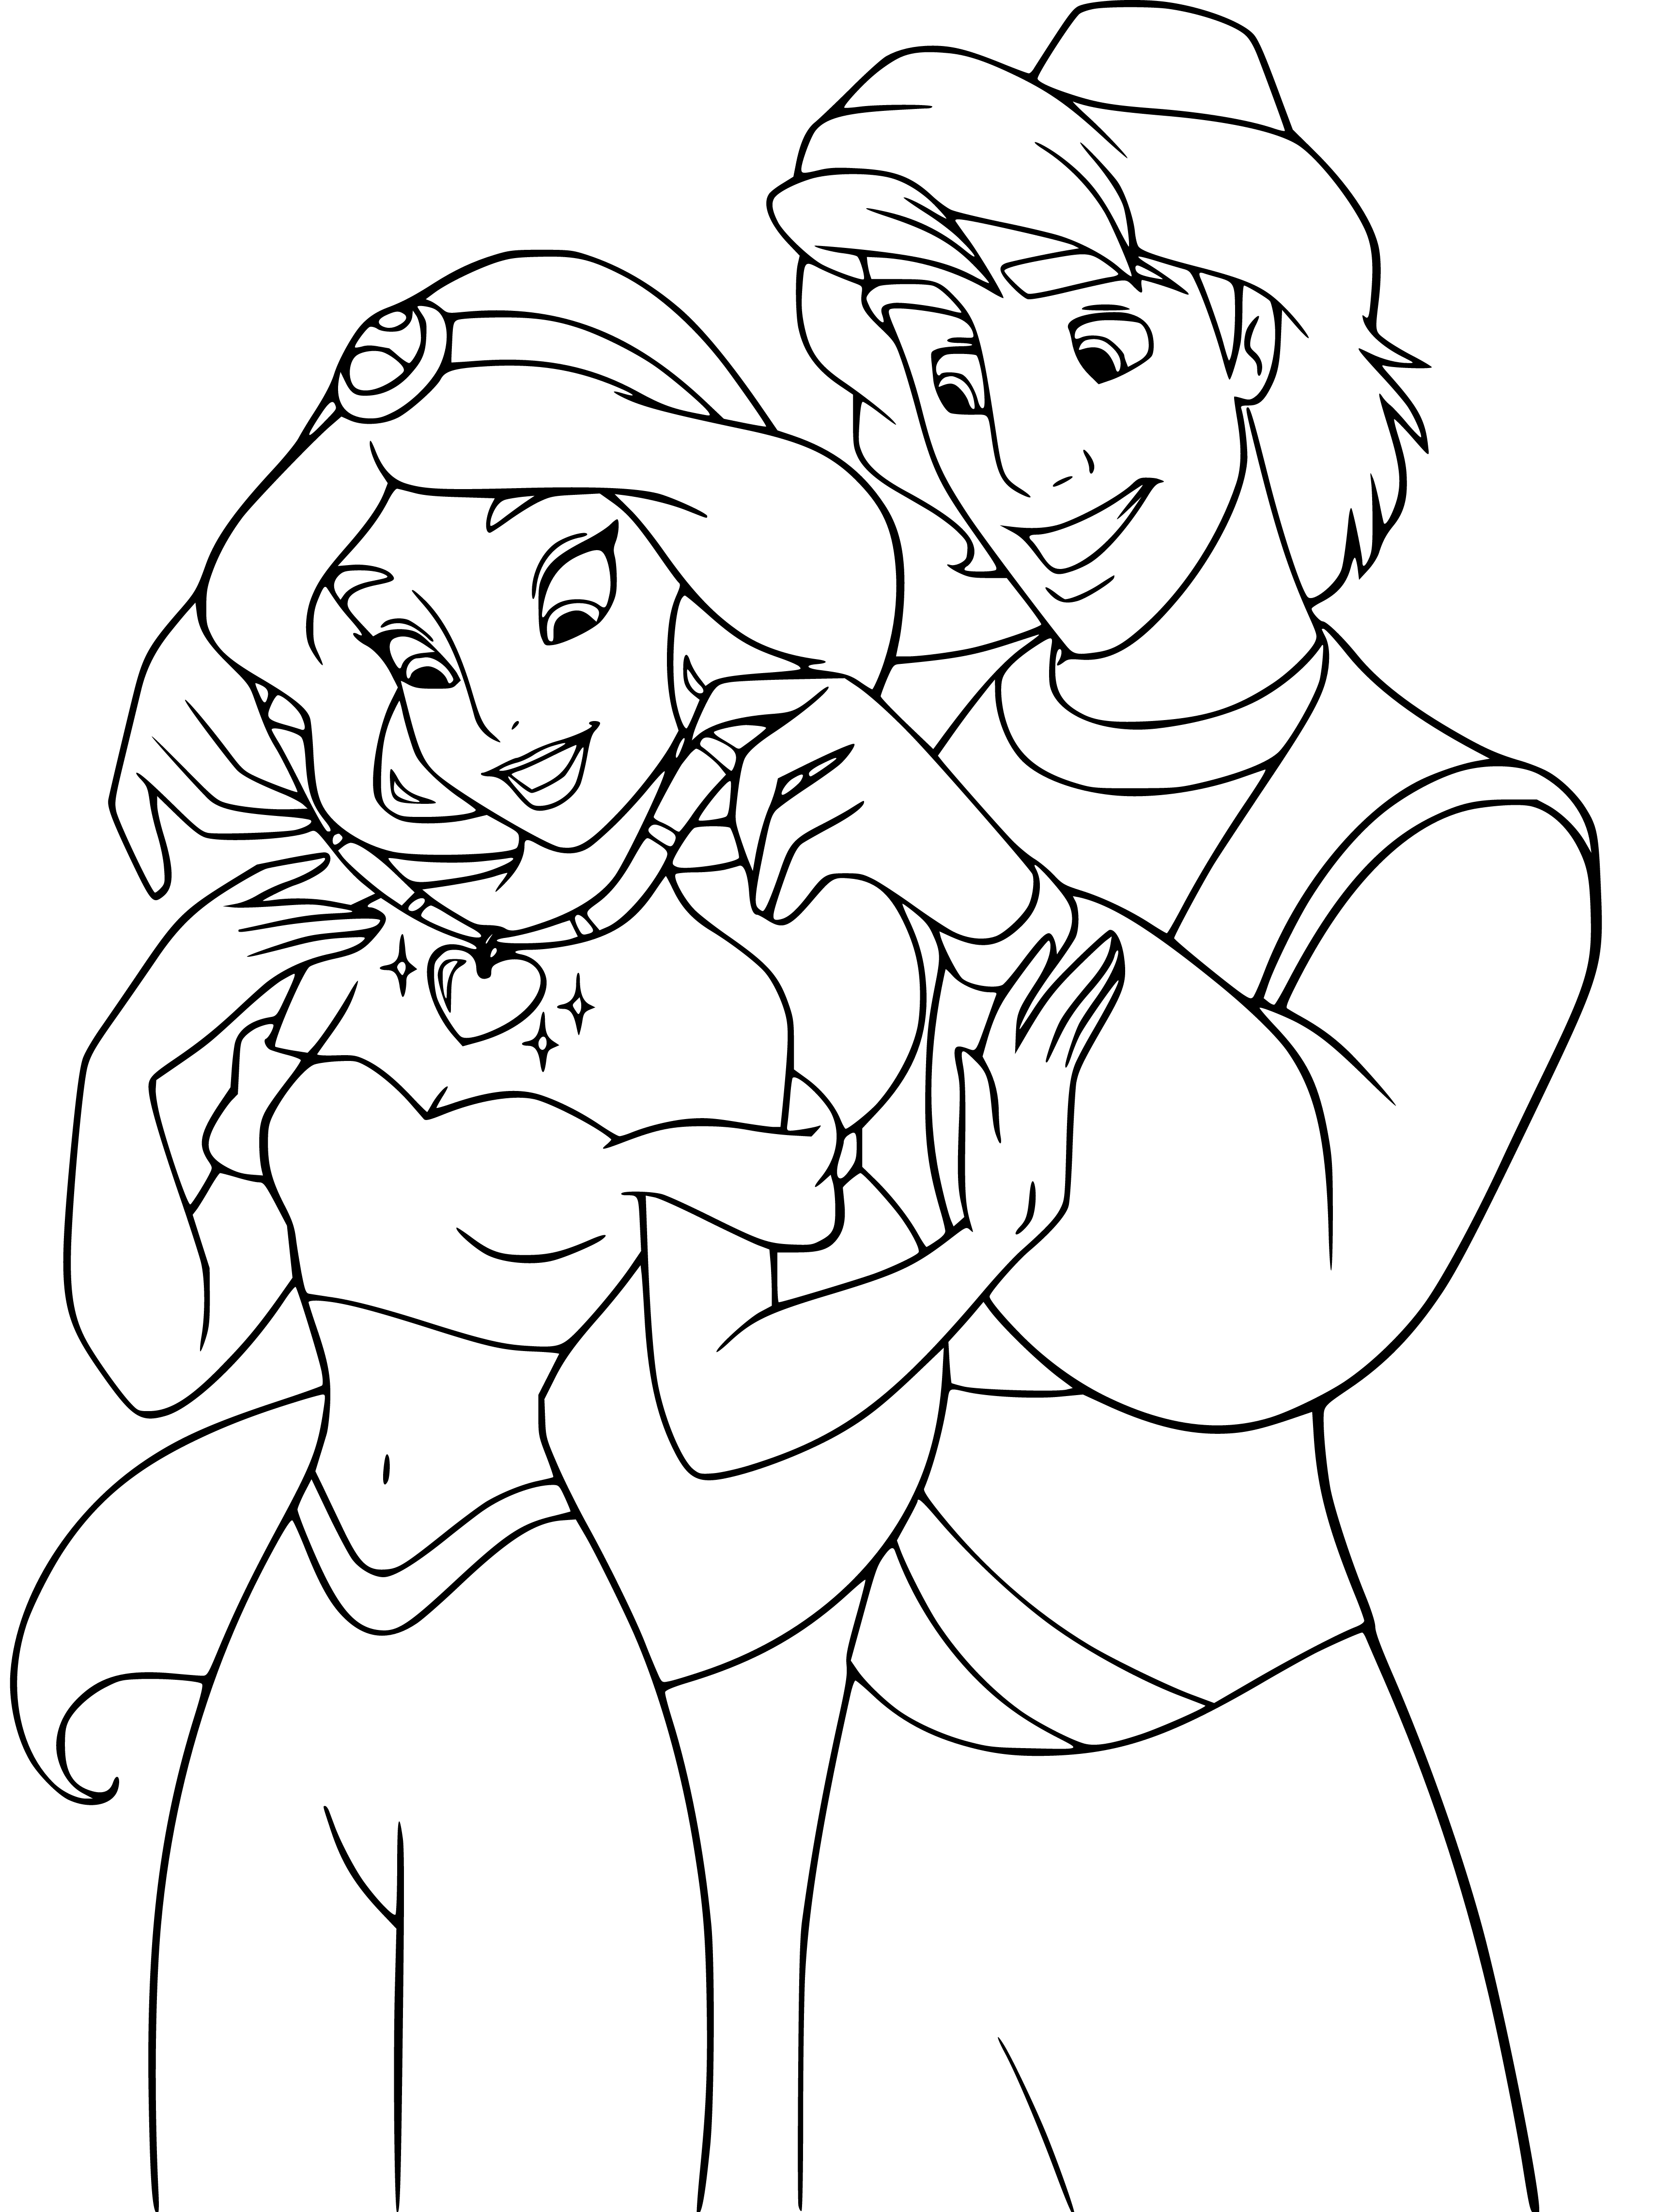 Aladdin and Princess Jasmine Coloring Pages for Kids - SheetalColor.com